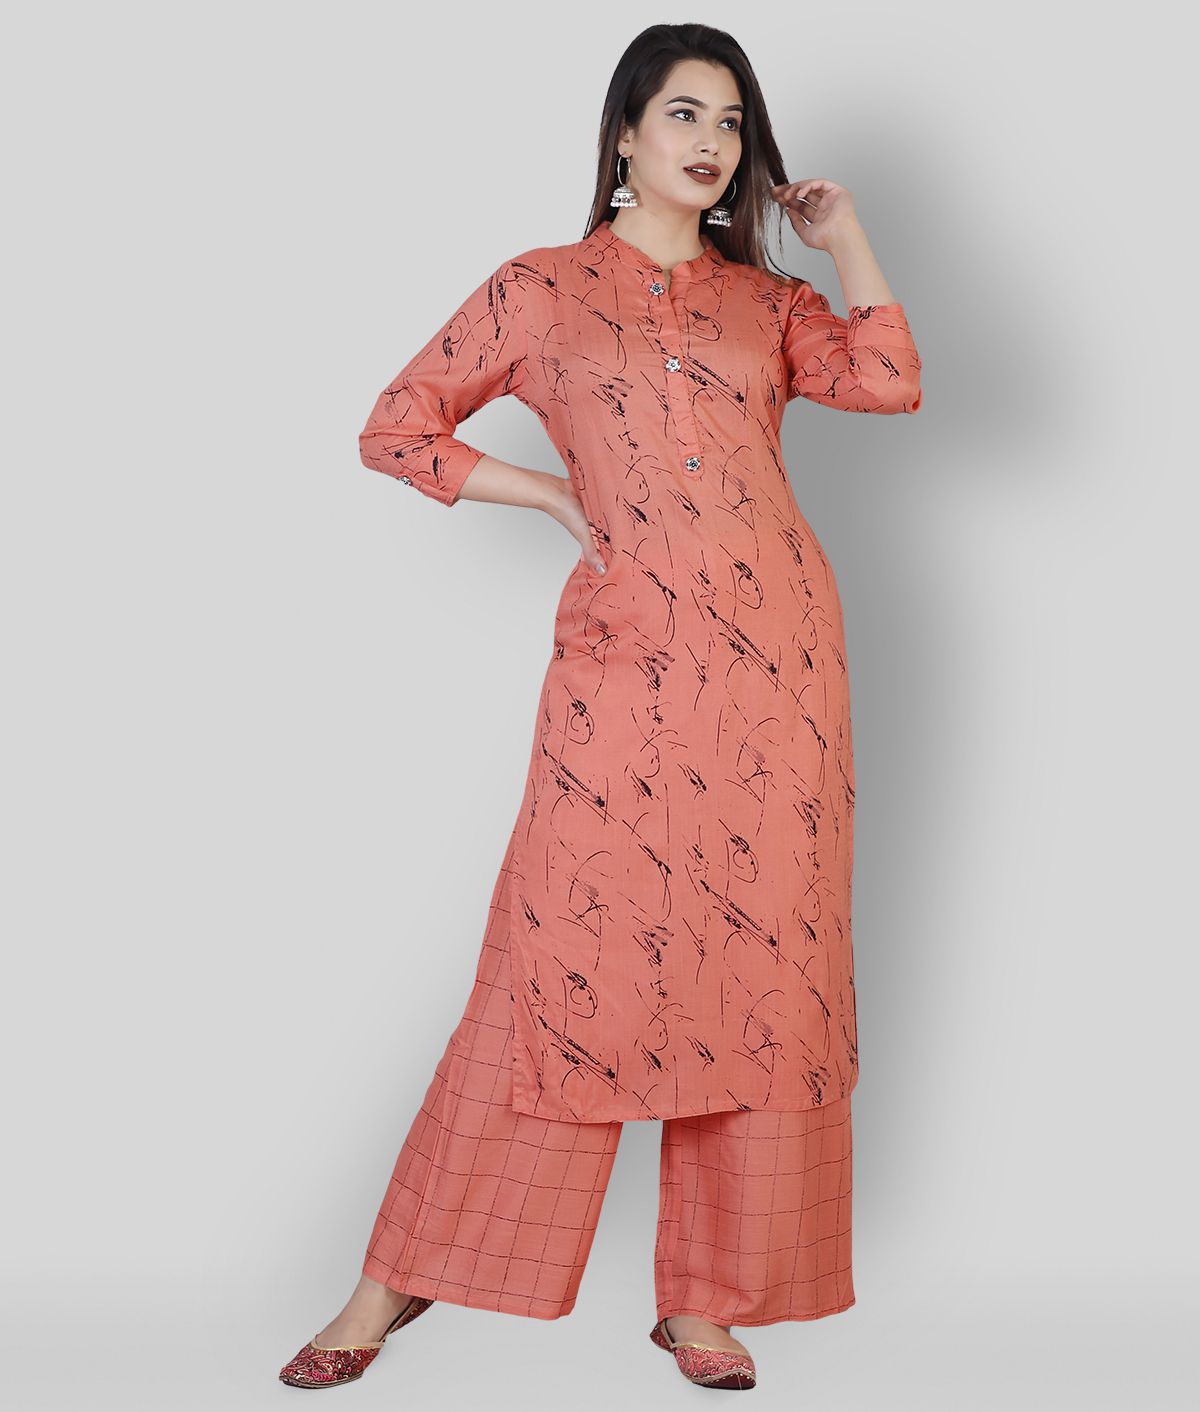     			JC4U - Orange Straight Rayon Women's Stitched Salwar Suit ( Pack of 1 )